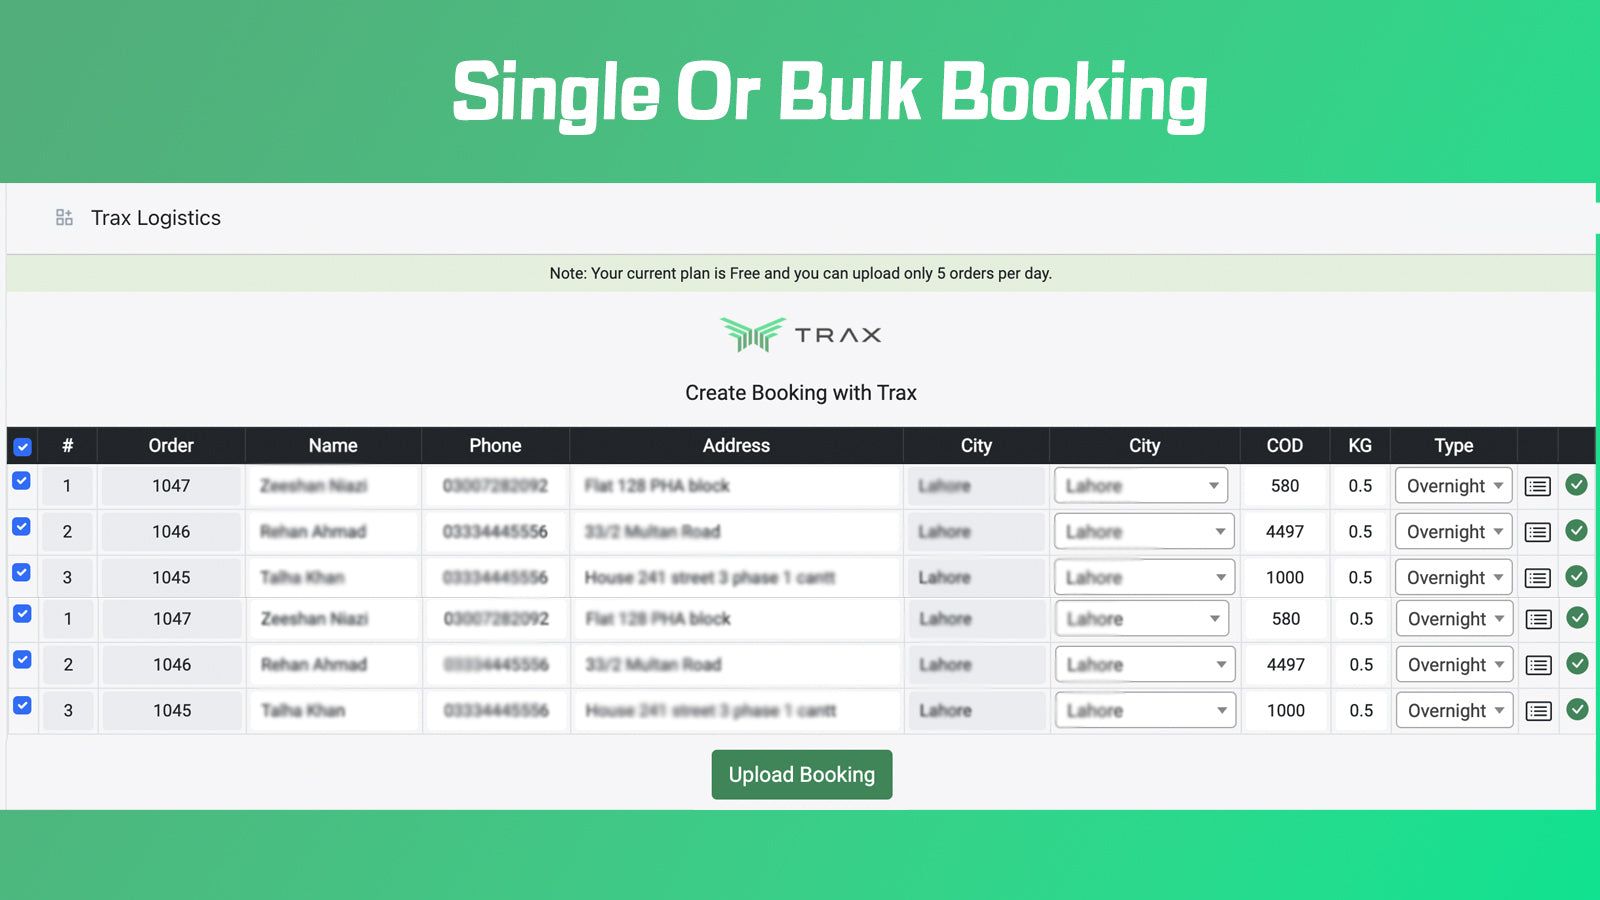 Single or Bulk Booking